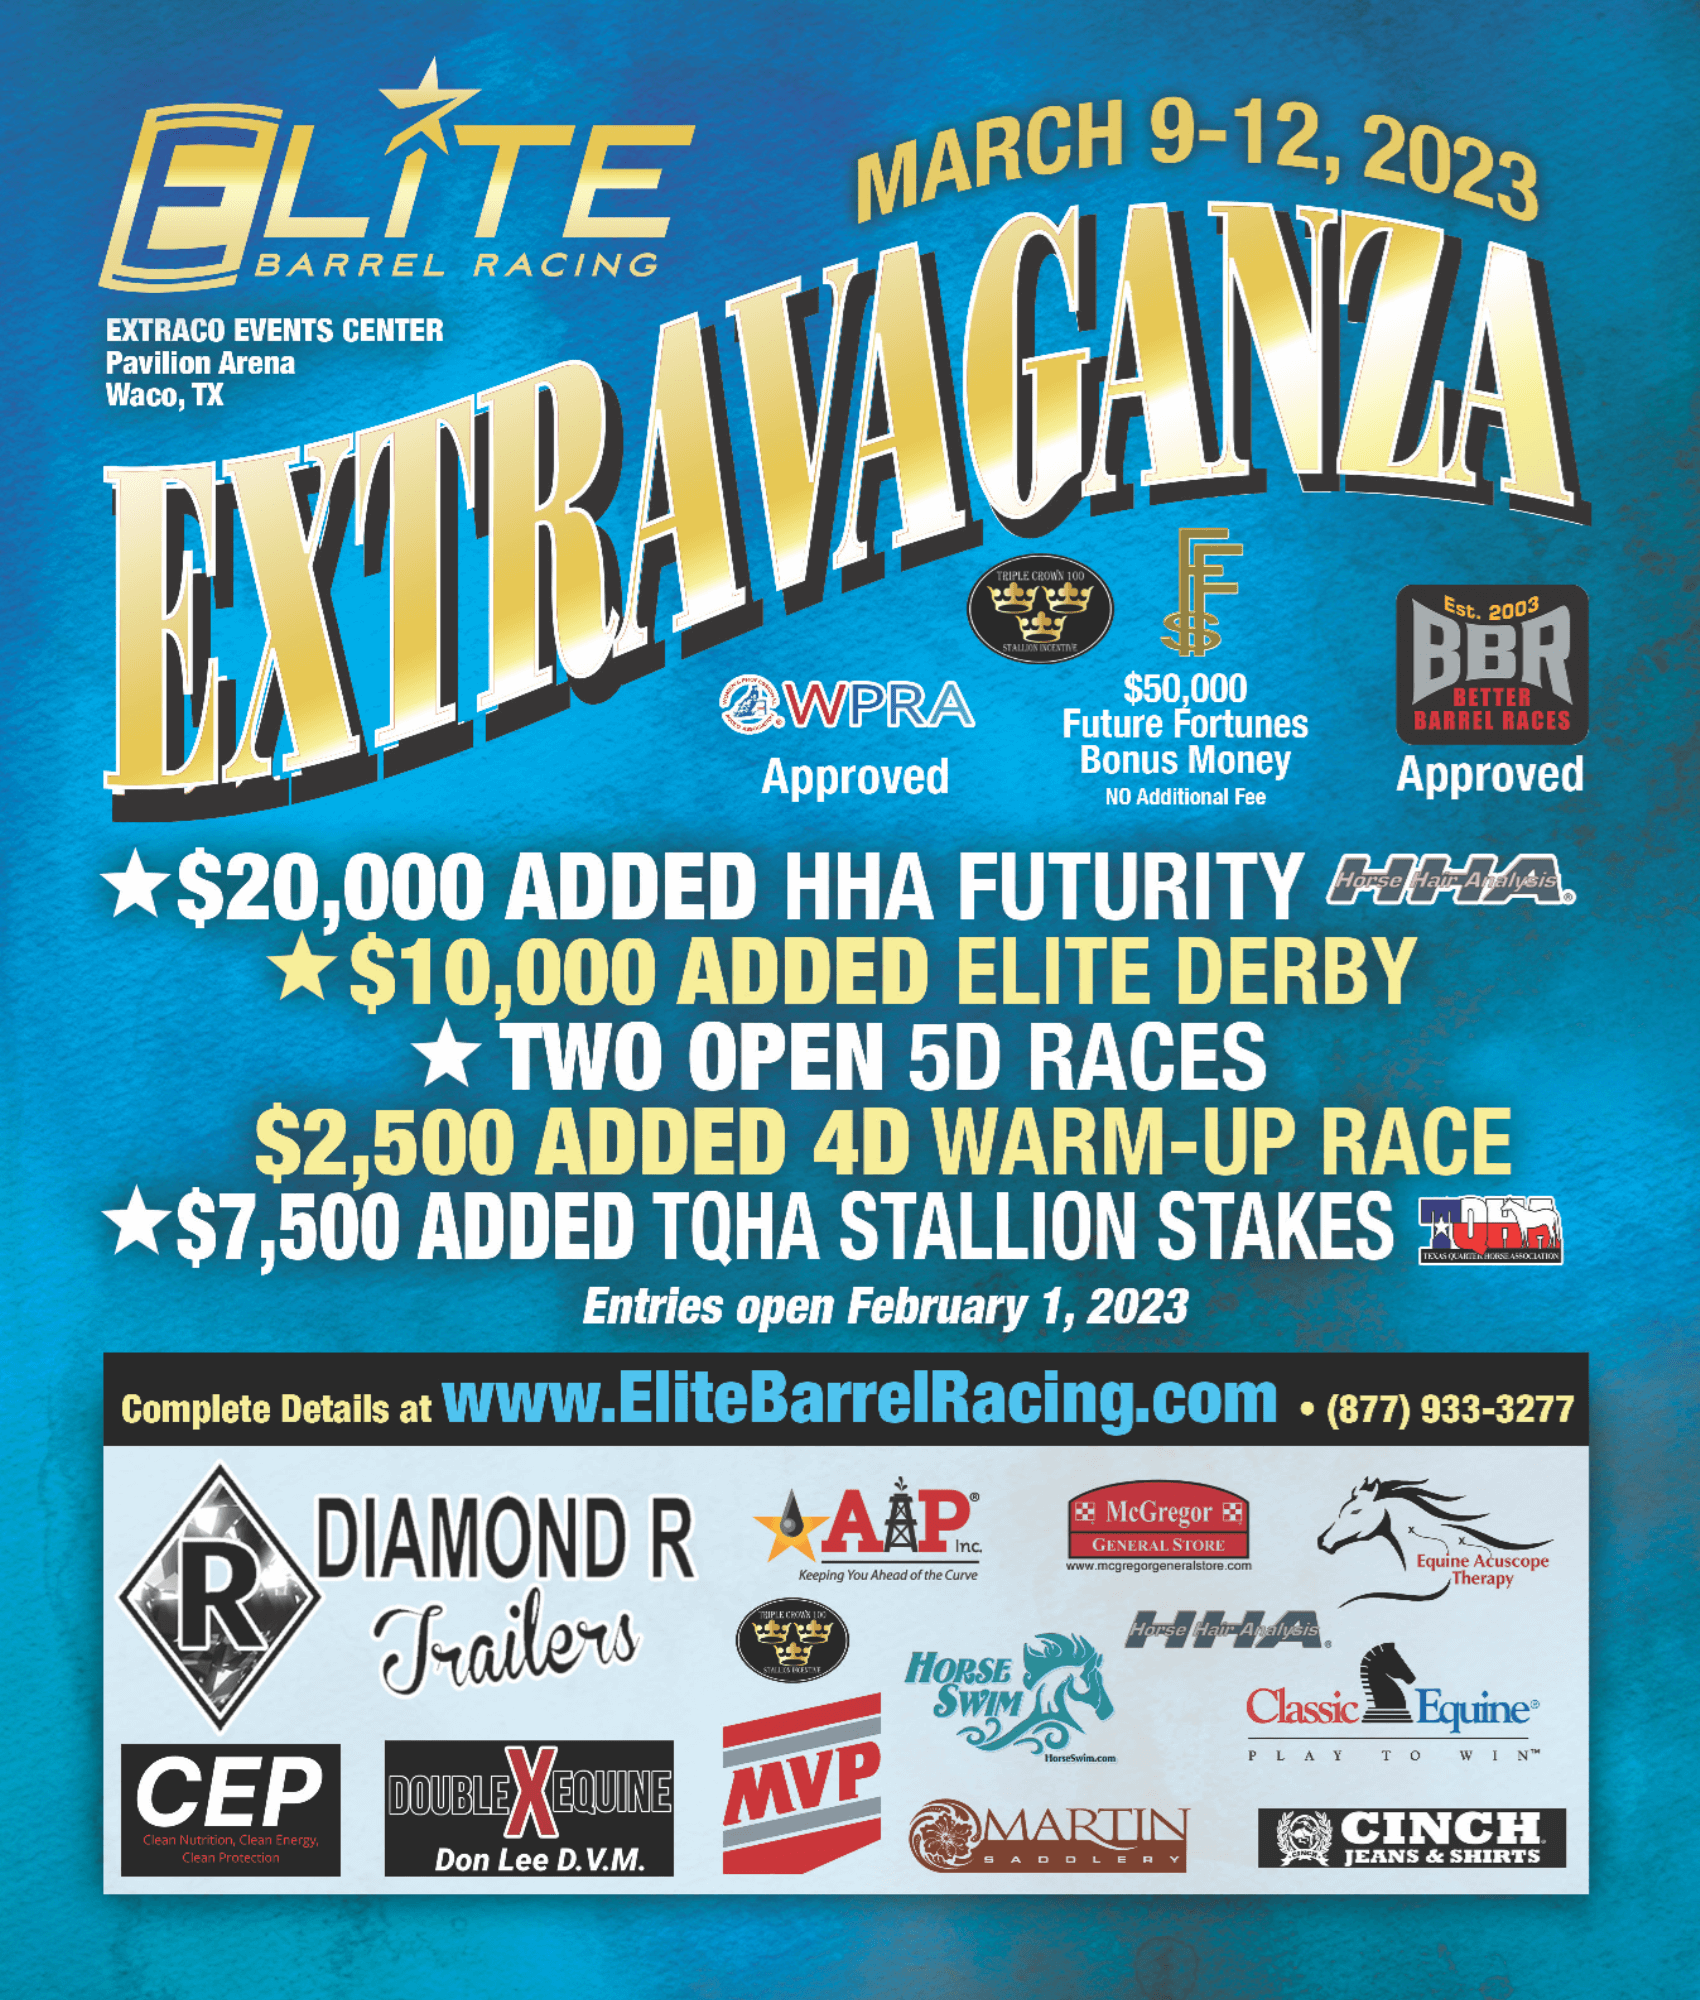 elite extravaganza barrel racing title sponser elite barrel racing waco extraco event center